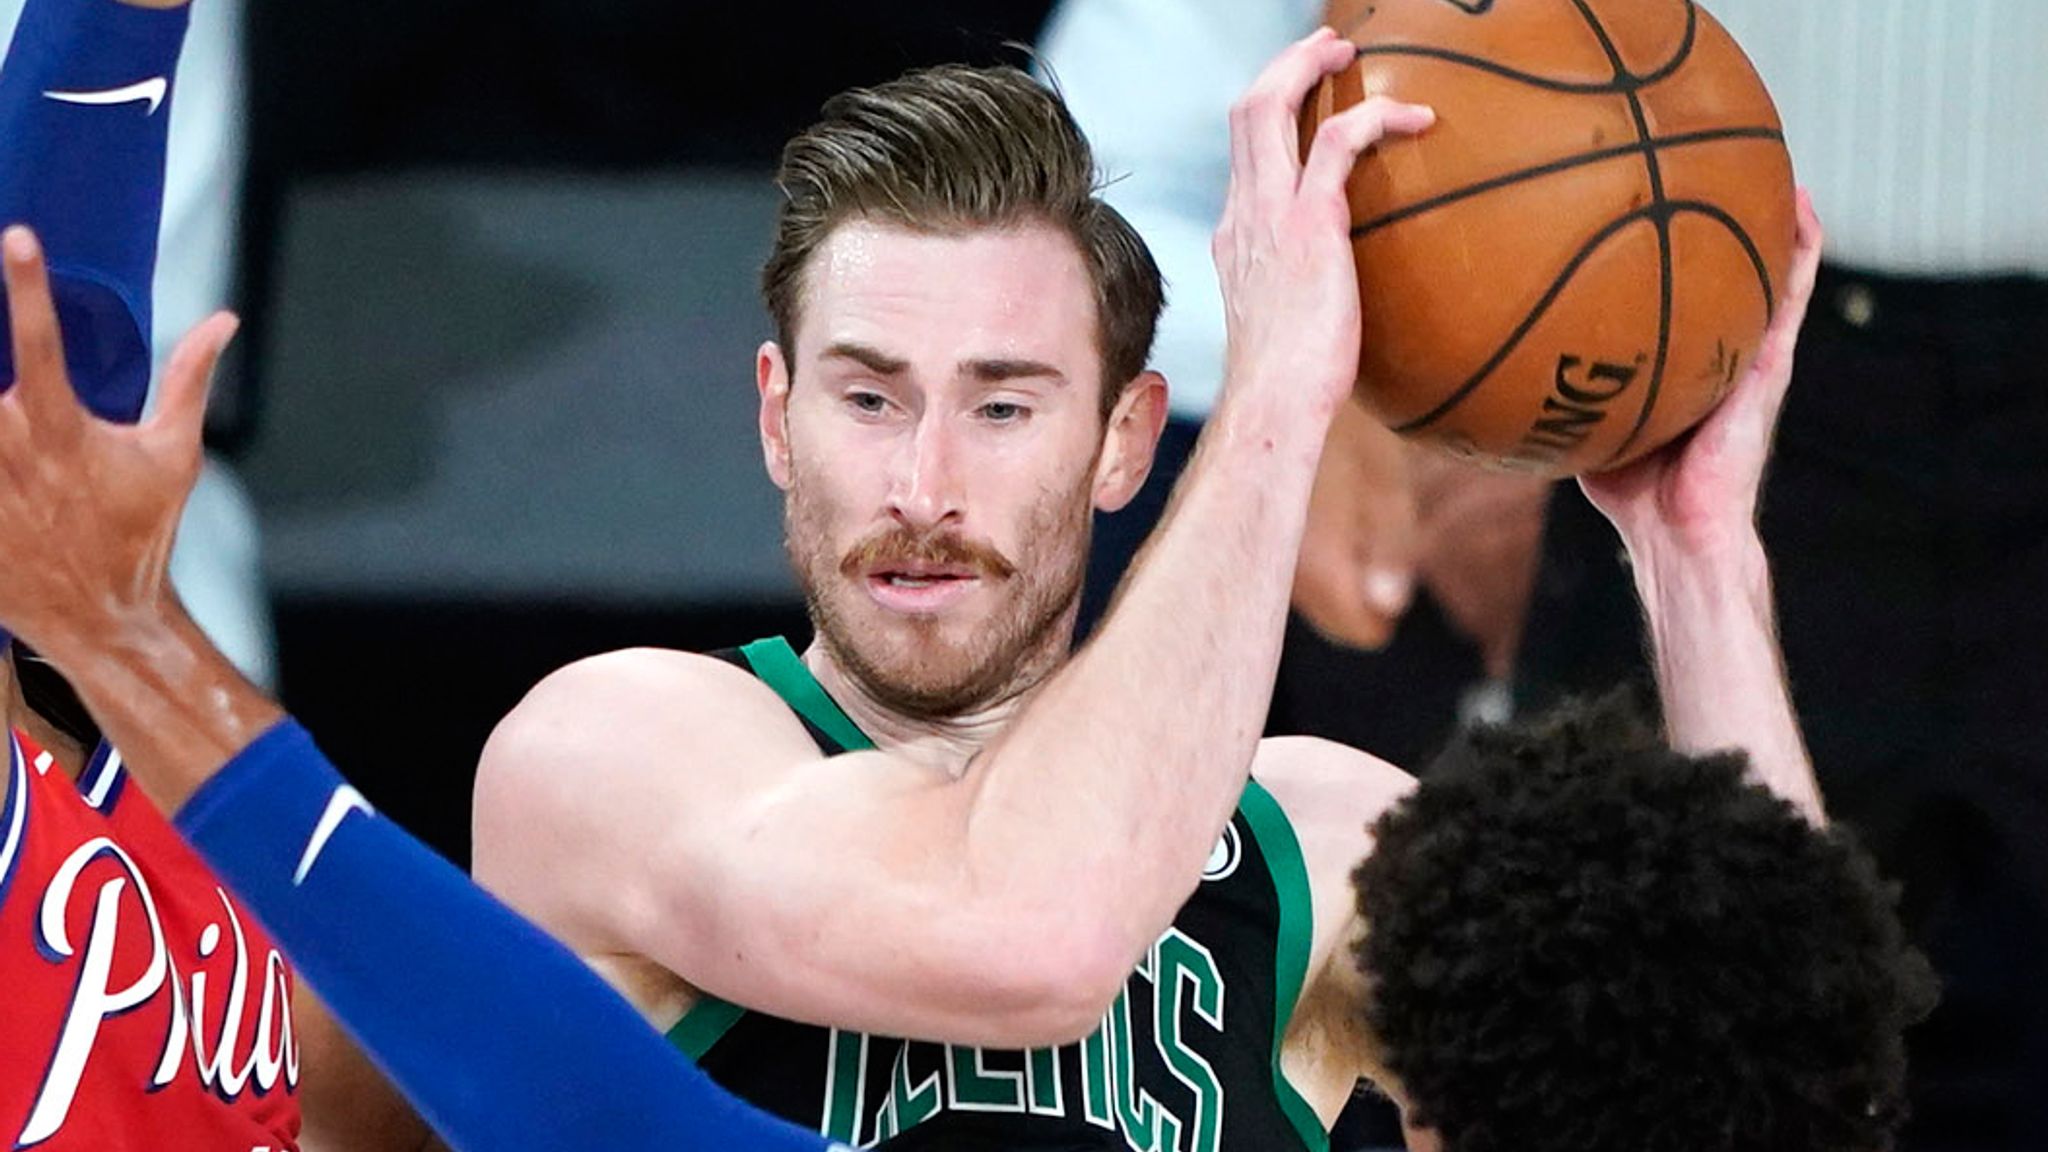 Gordon Hayward escolhe o Boston Celtics